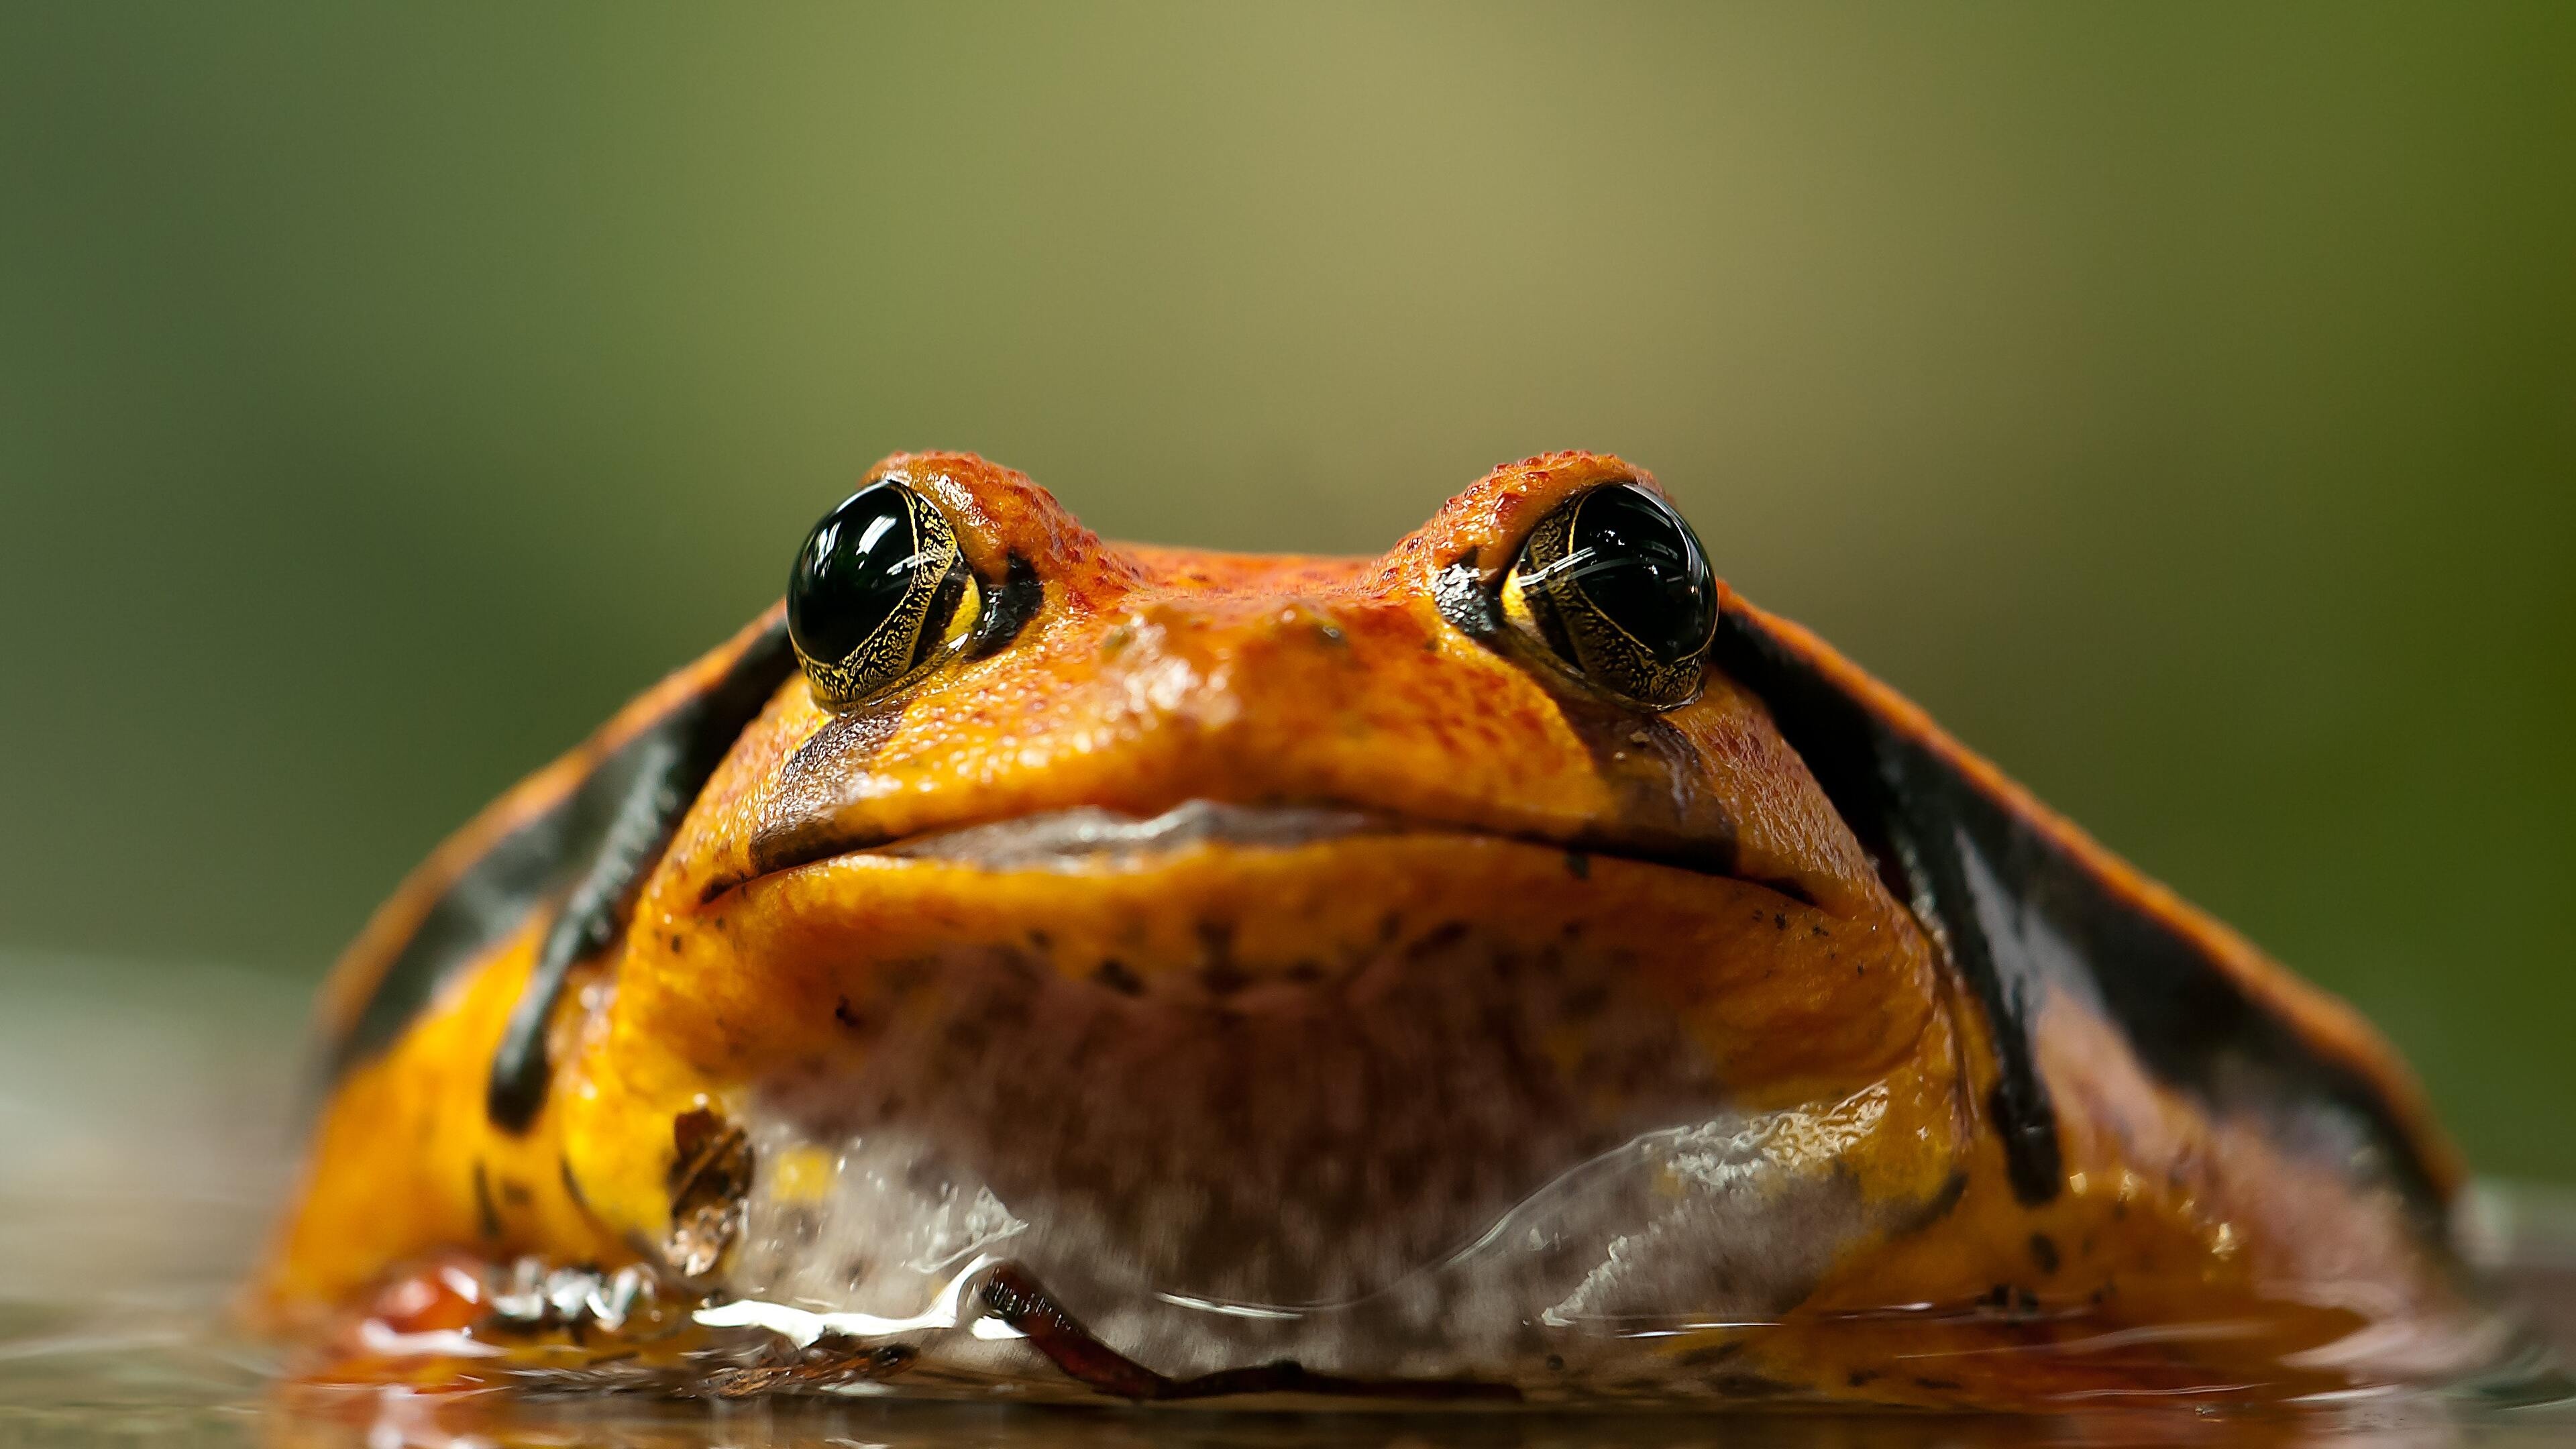 Black and orange frog, Striking contrast, Eye-catching colours, Unique appearance, 3840x2160 4K Desktop